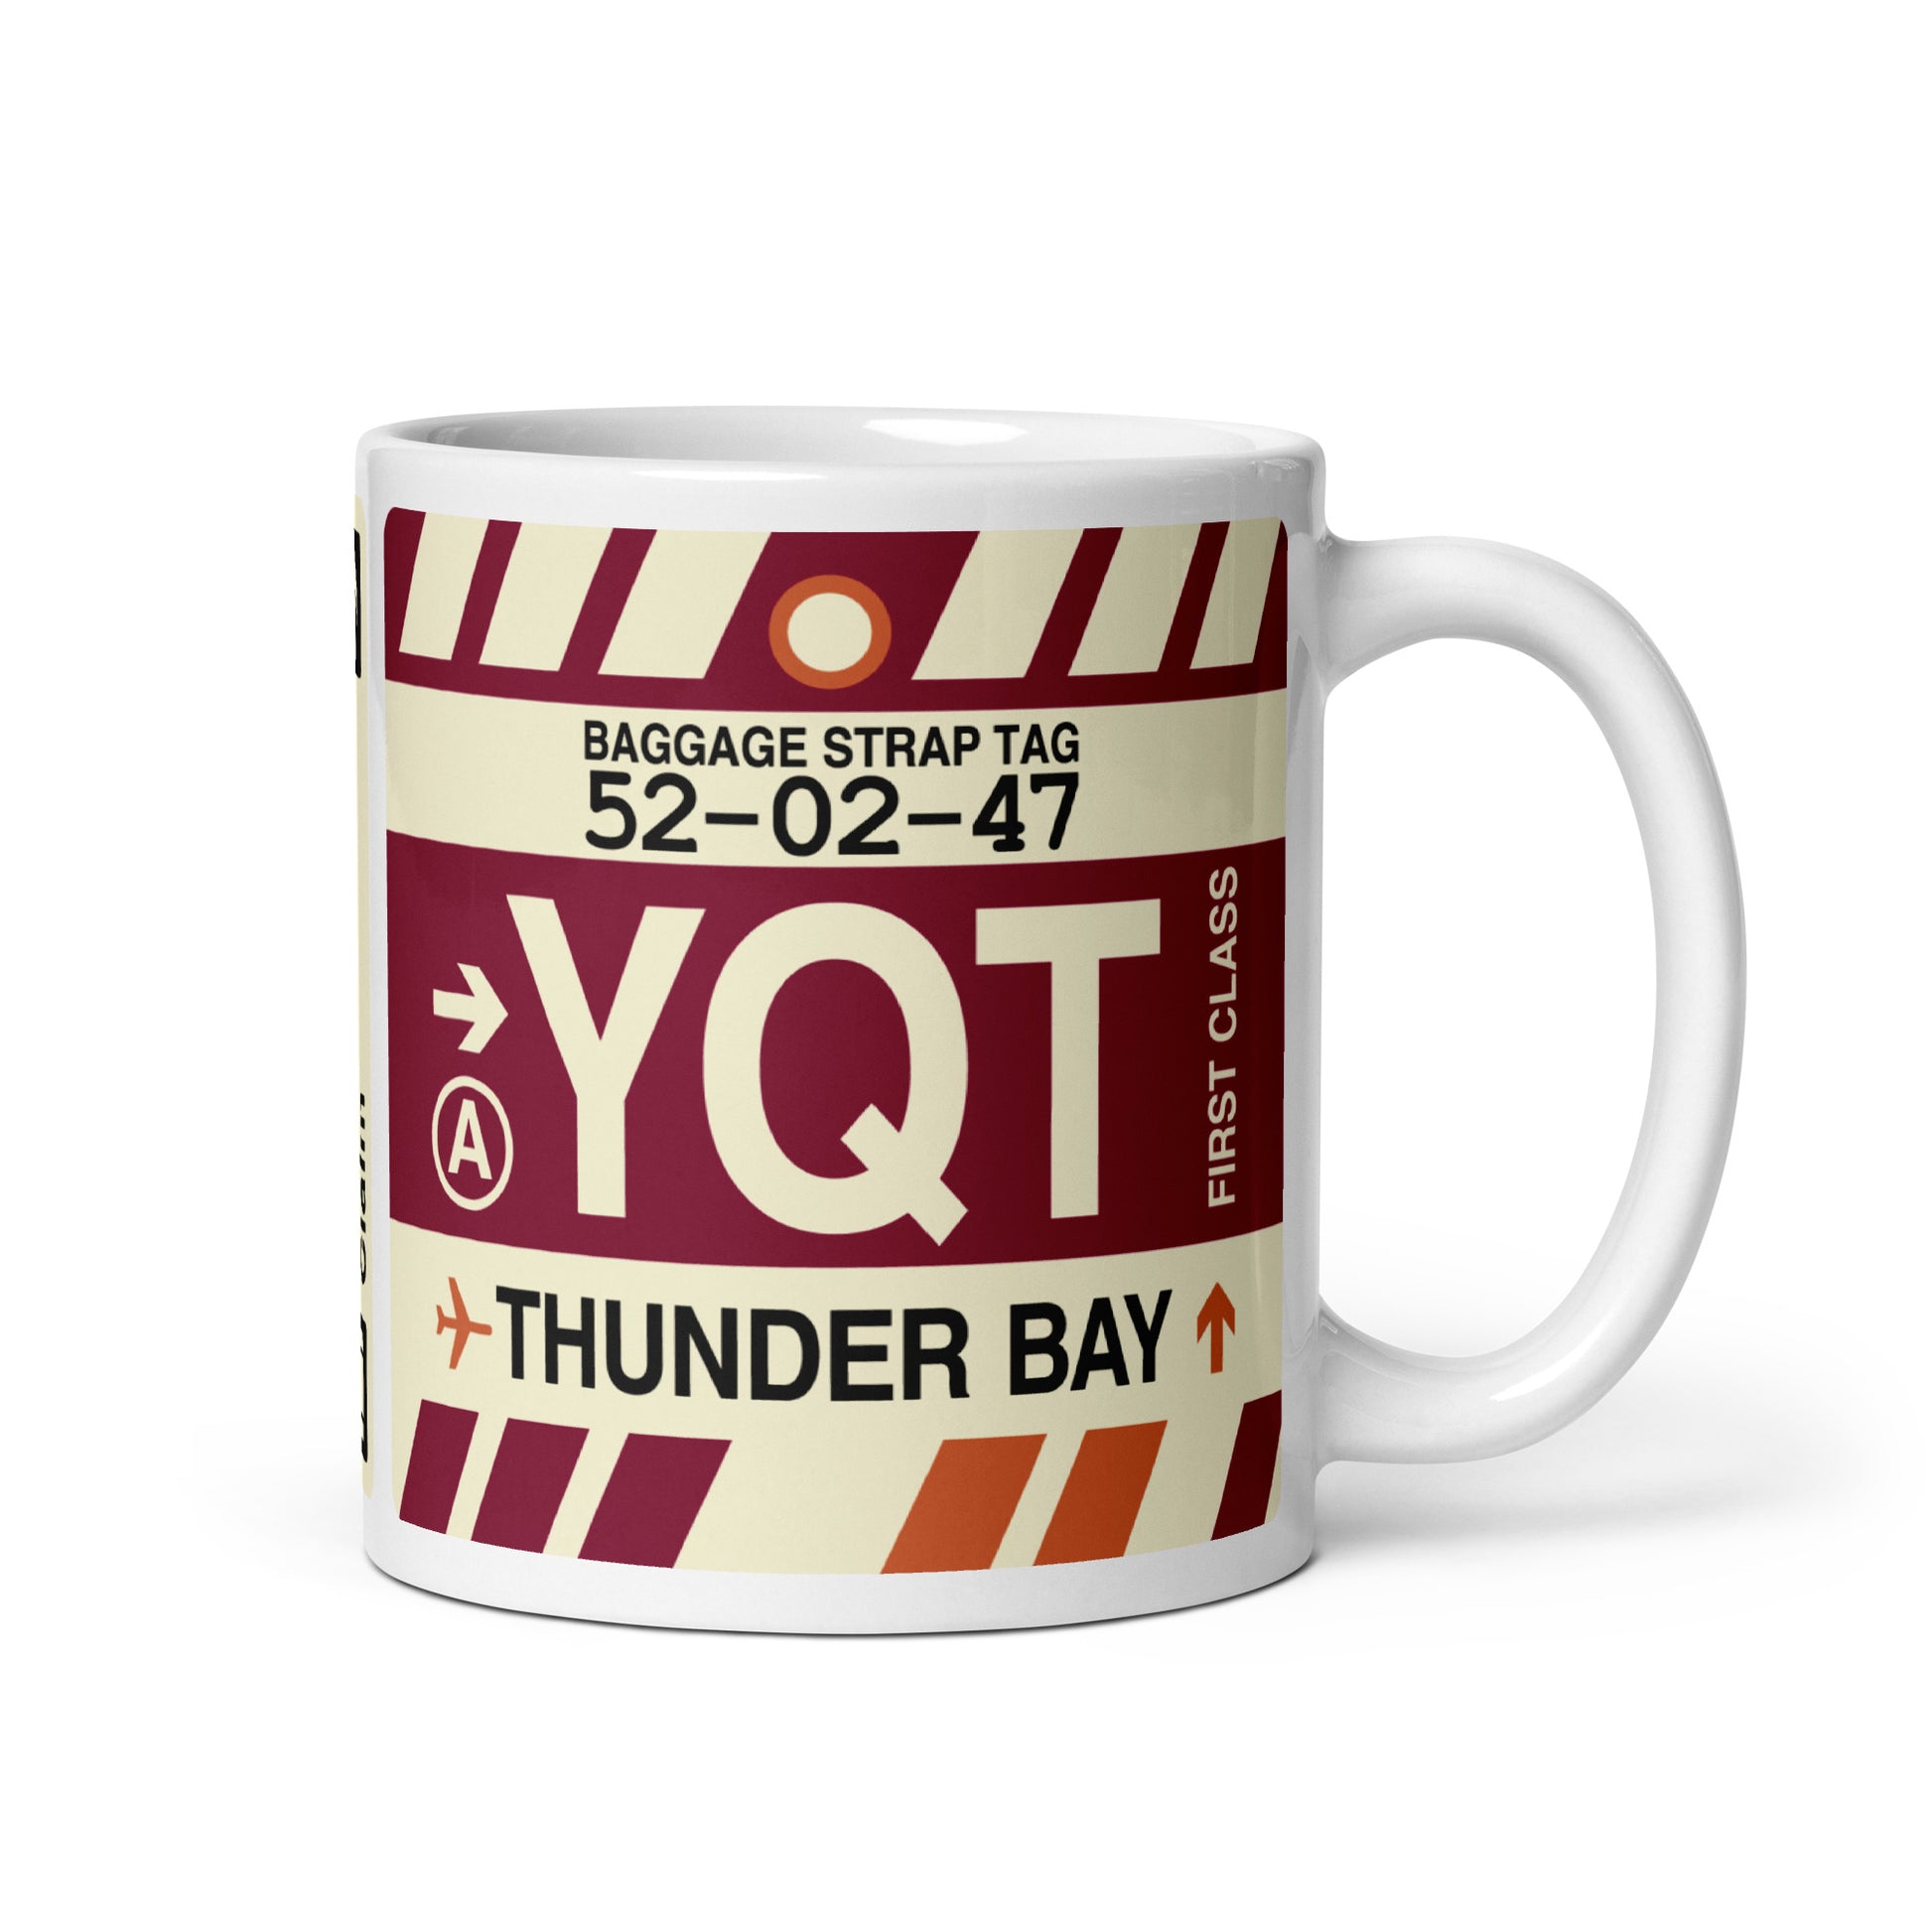 Travel Gift Coffee Mug • YQT Thunder Bay • YHM Designs - Image 01